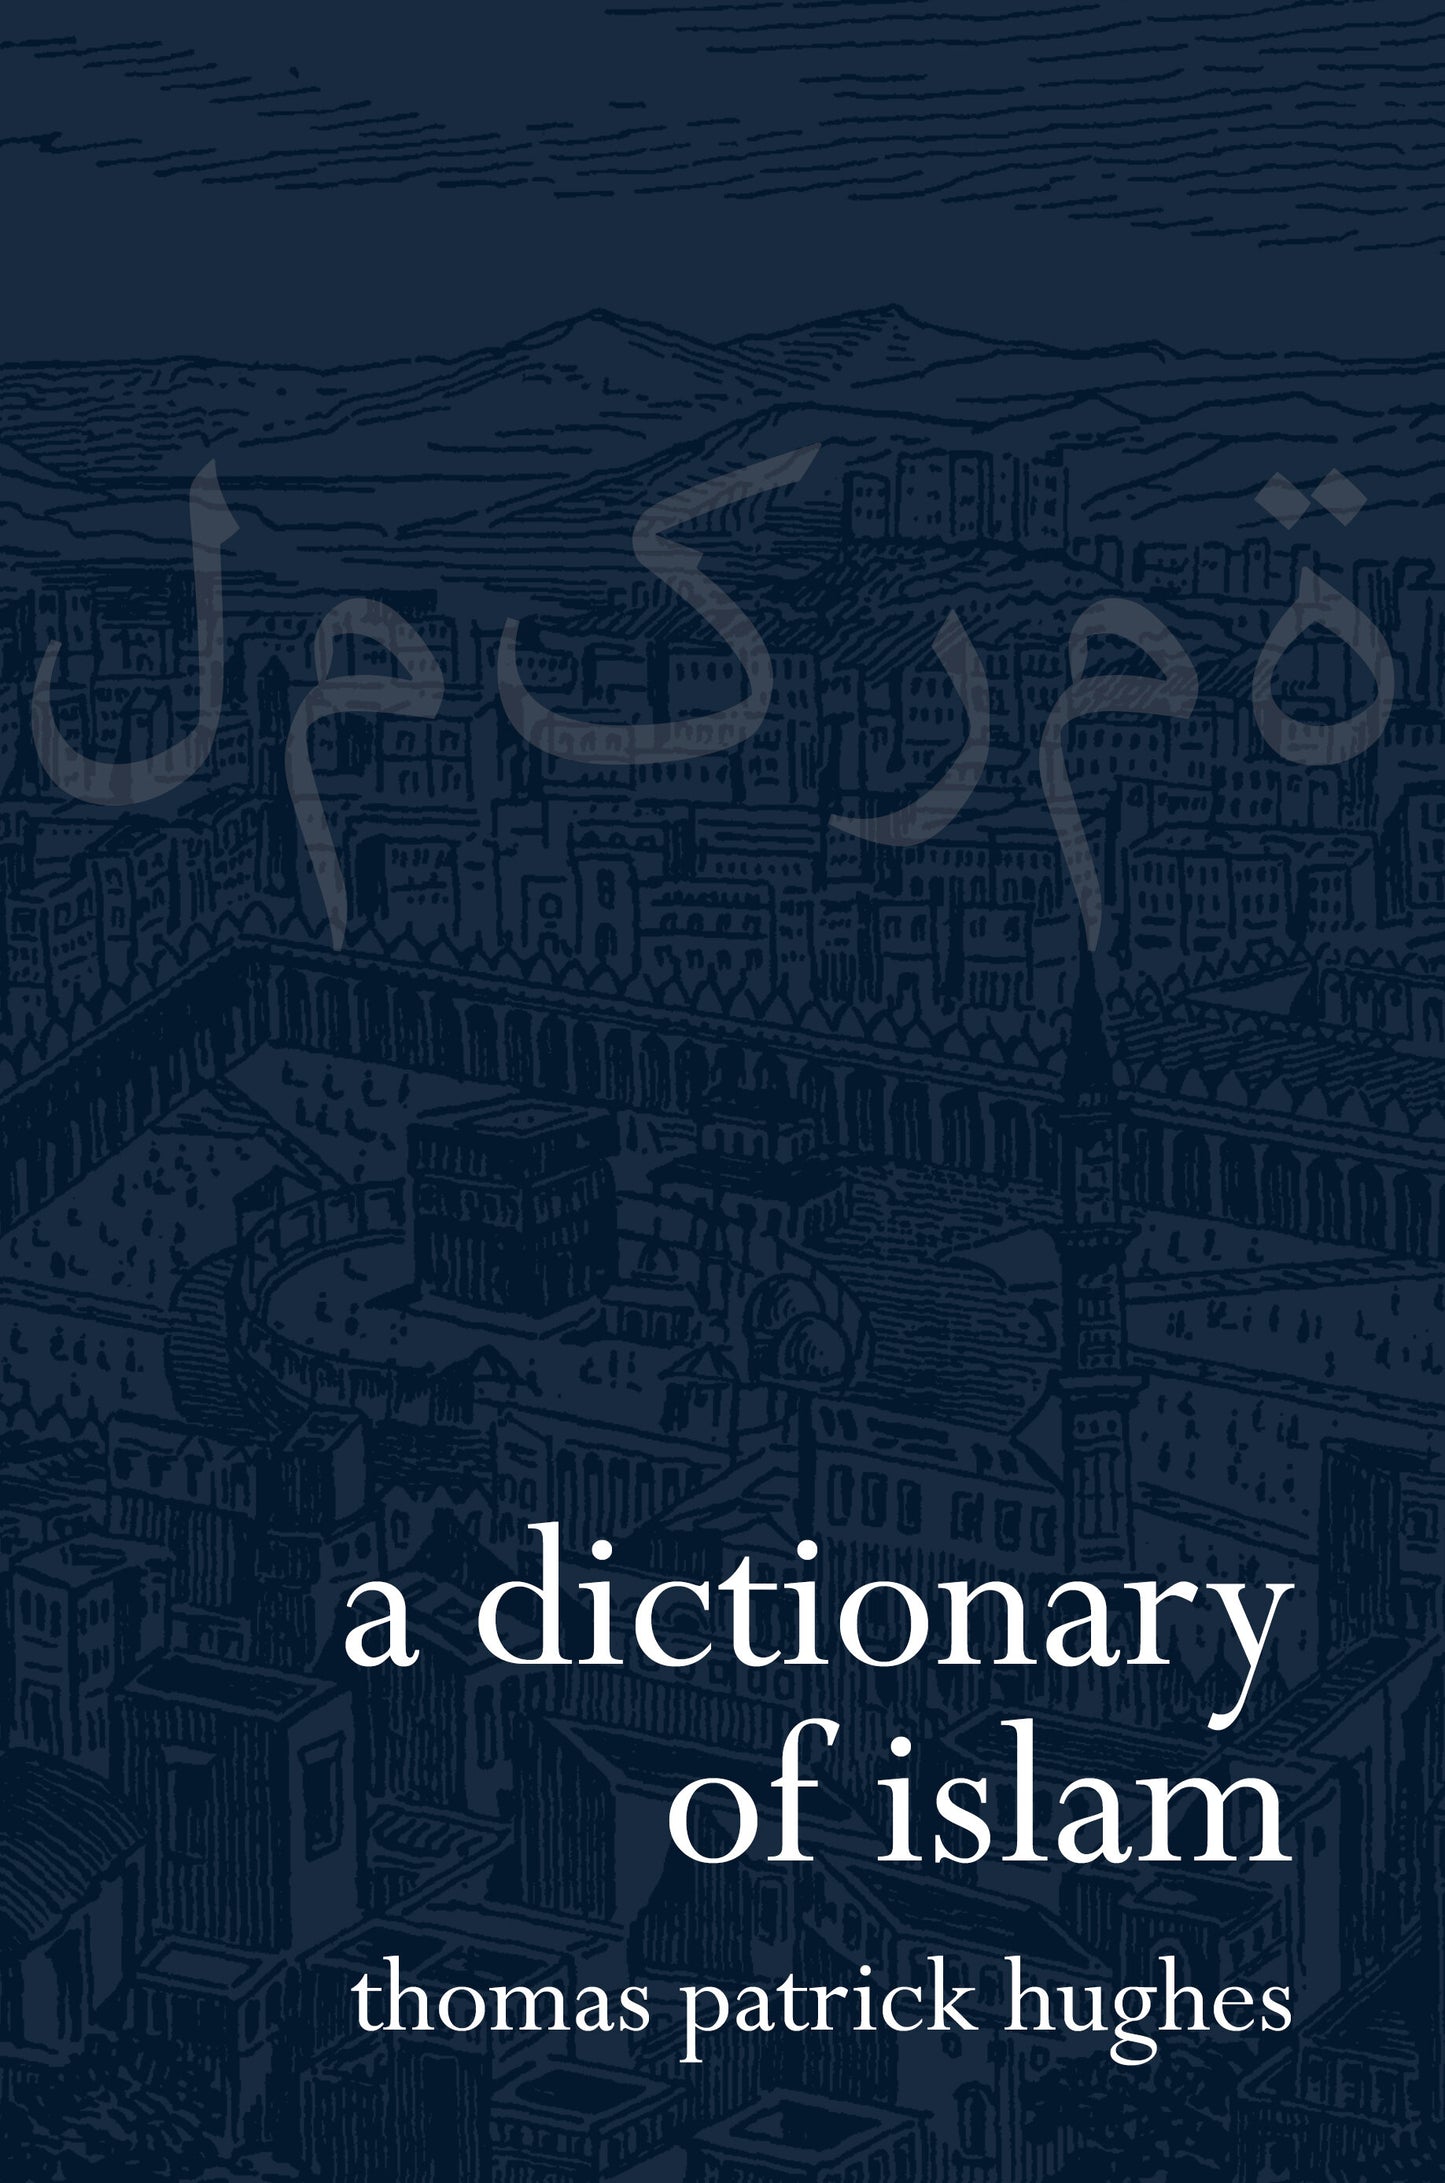 Dictionary of Islam